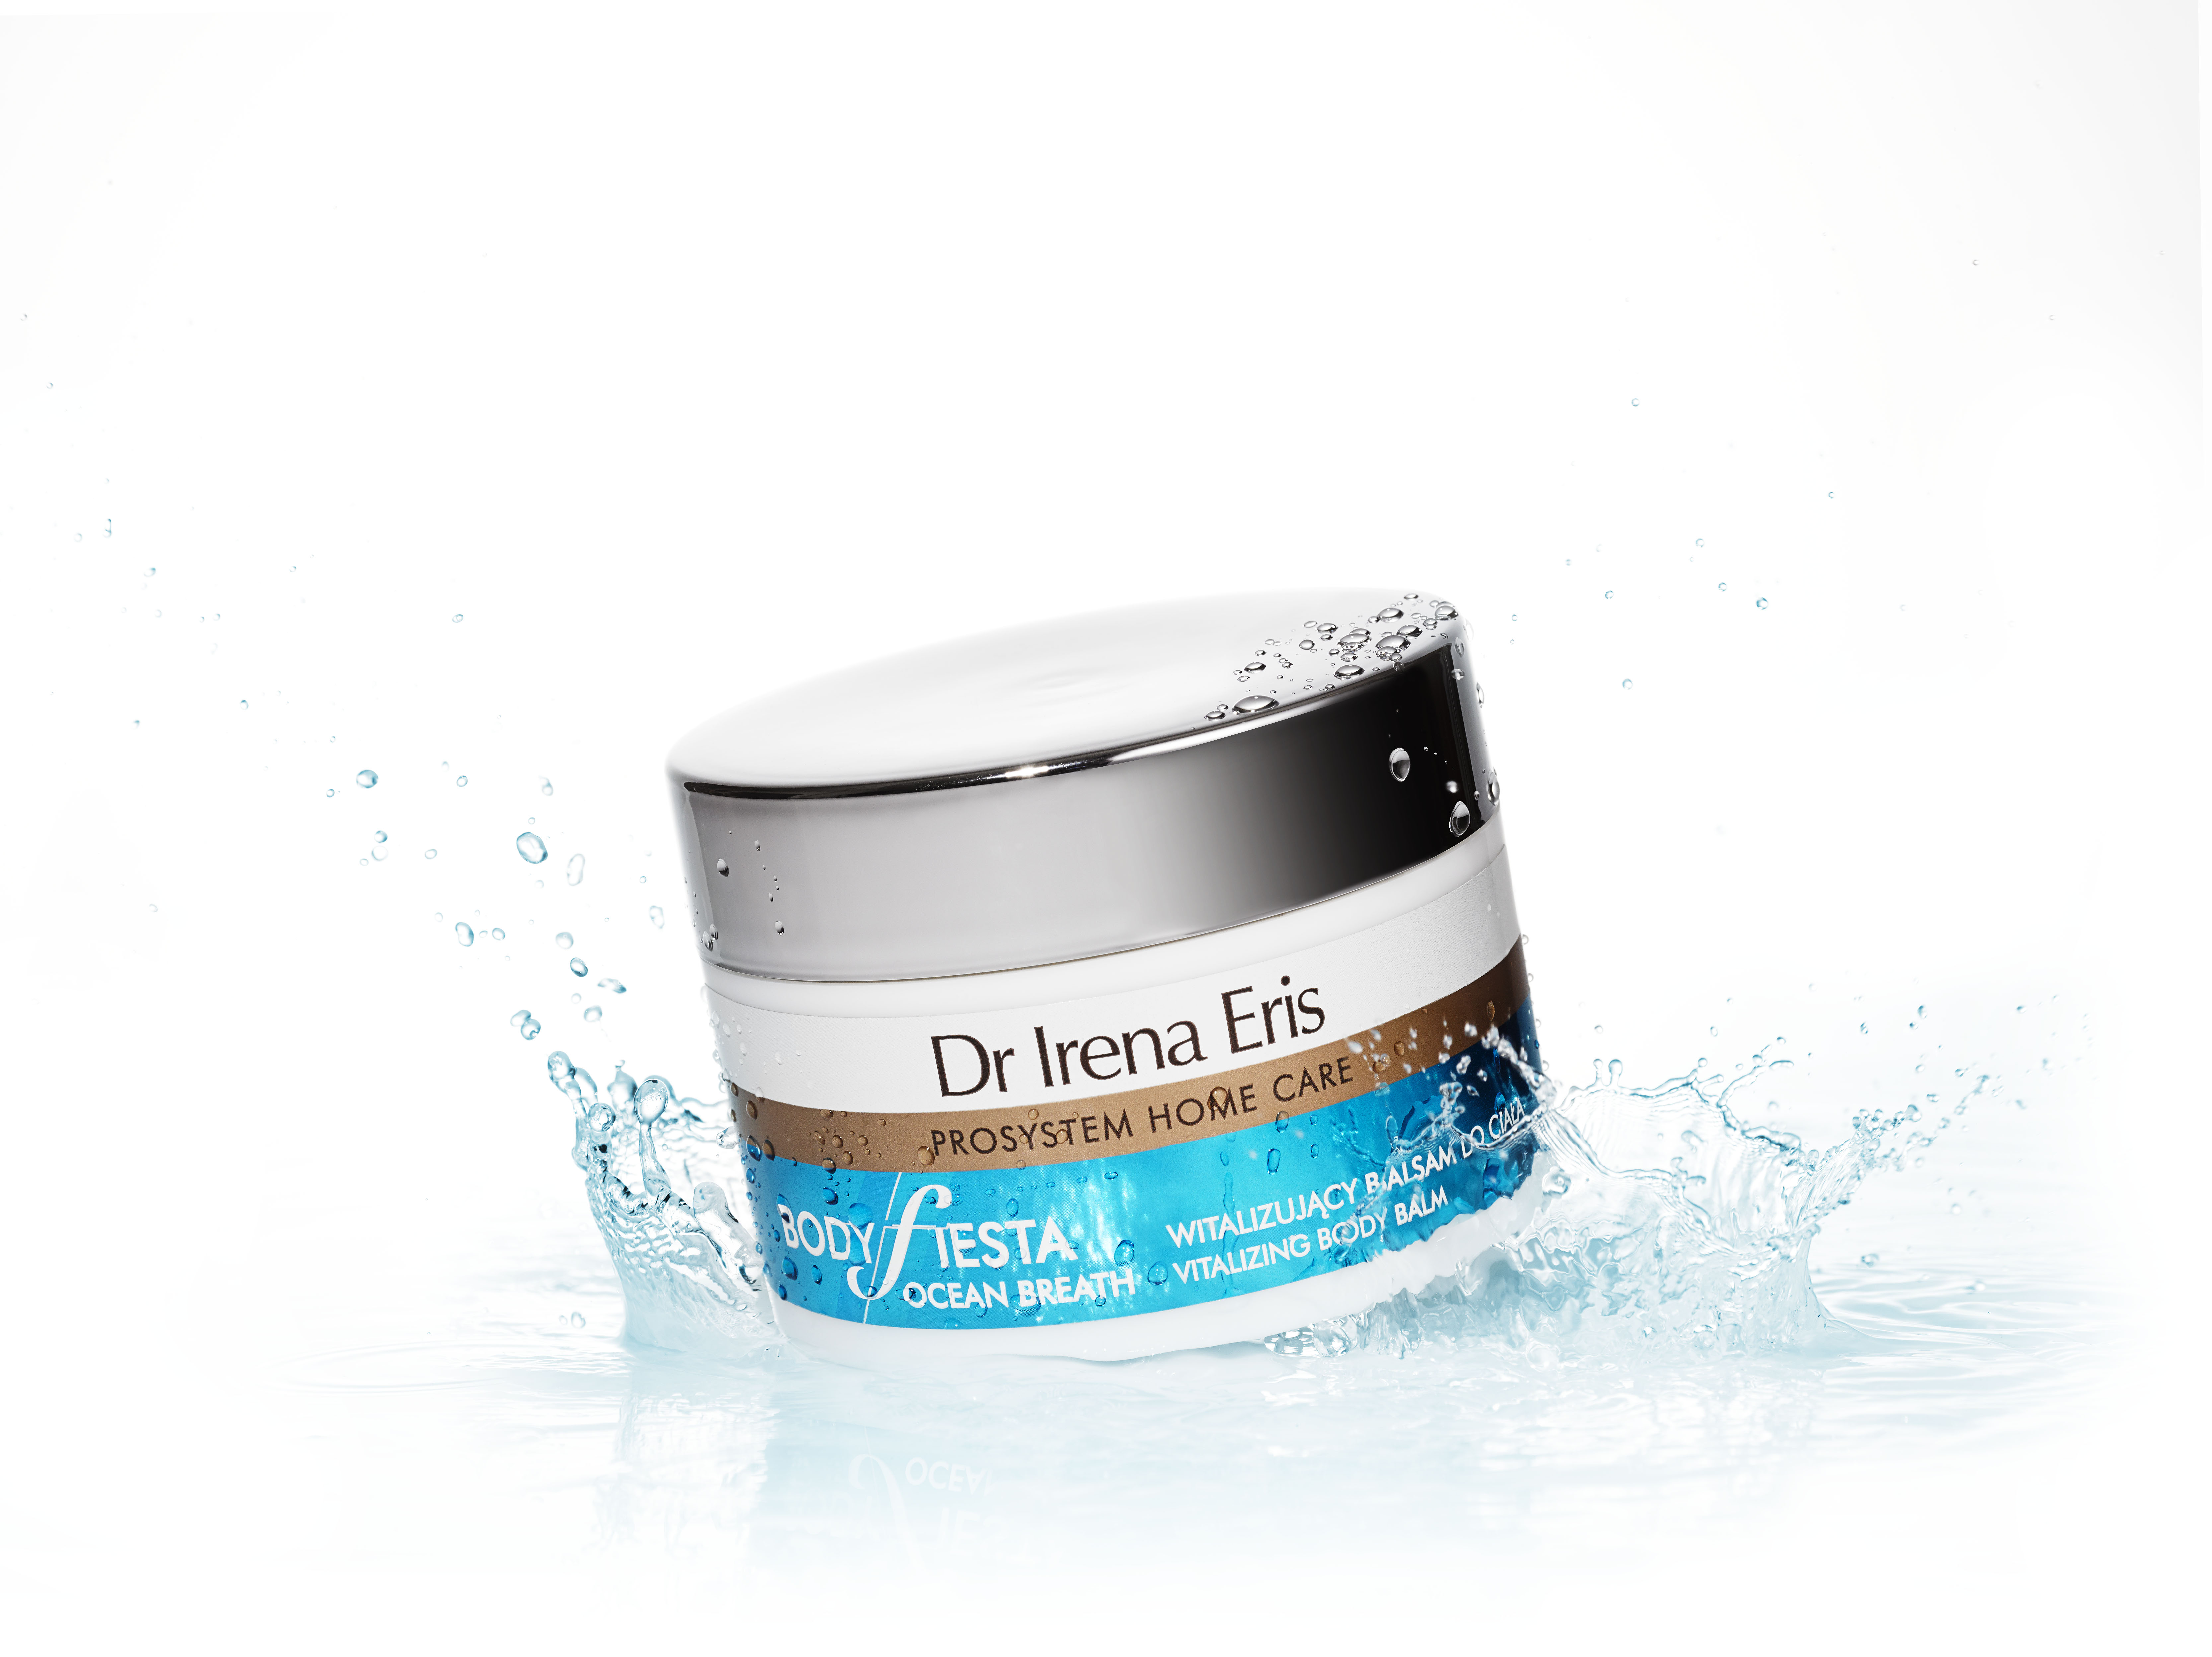 Dr Irena Eris Fiesta Ocean Breath